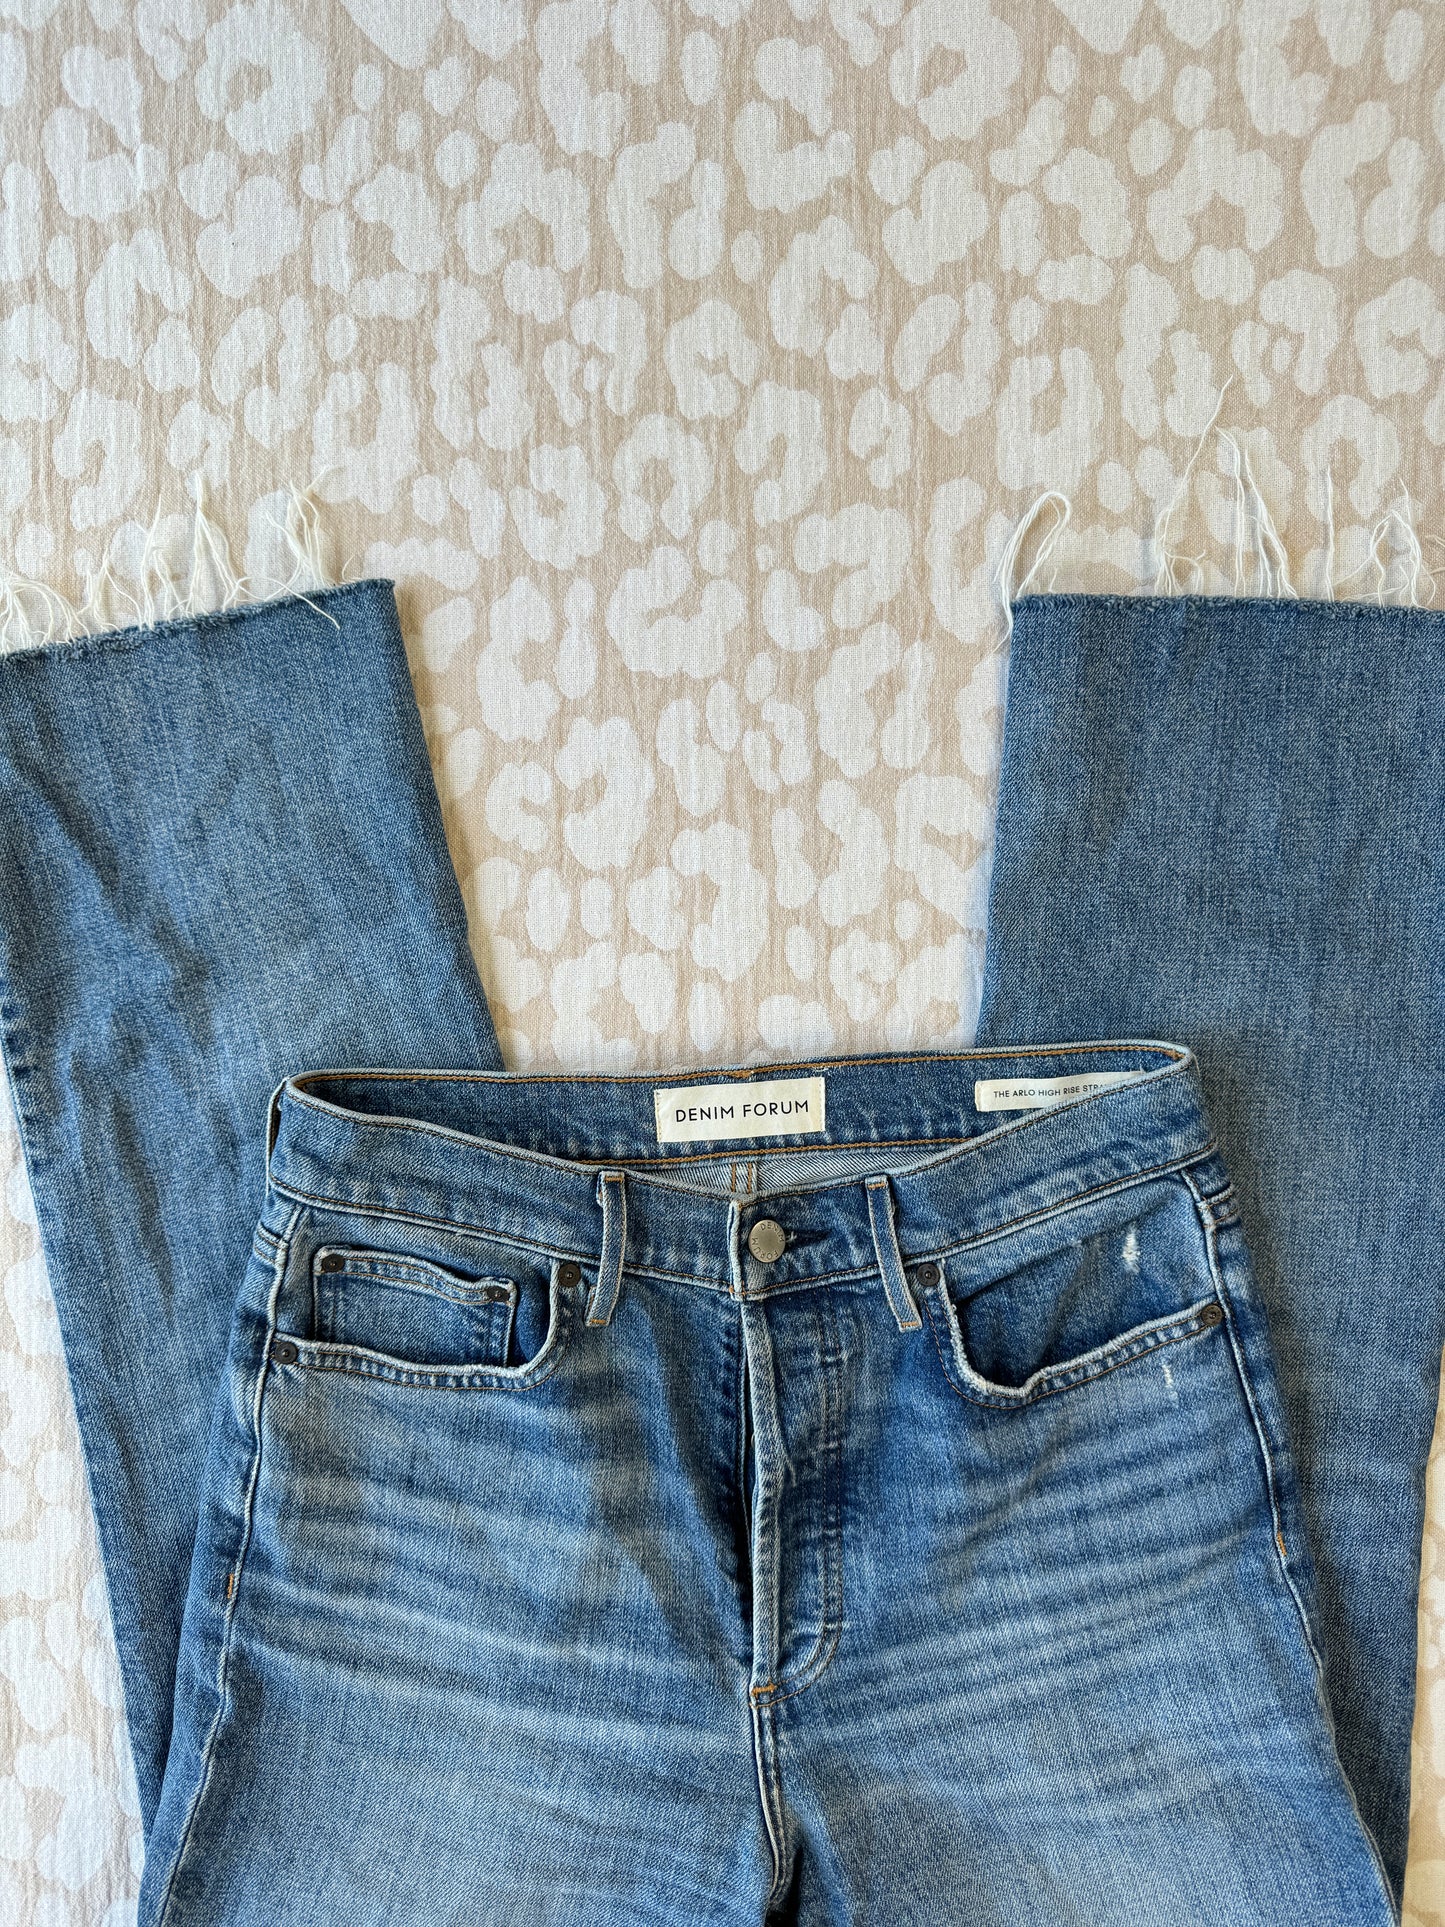 Denim Forum Arlo Straight Jeans (27)